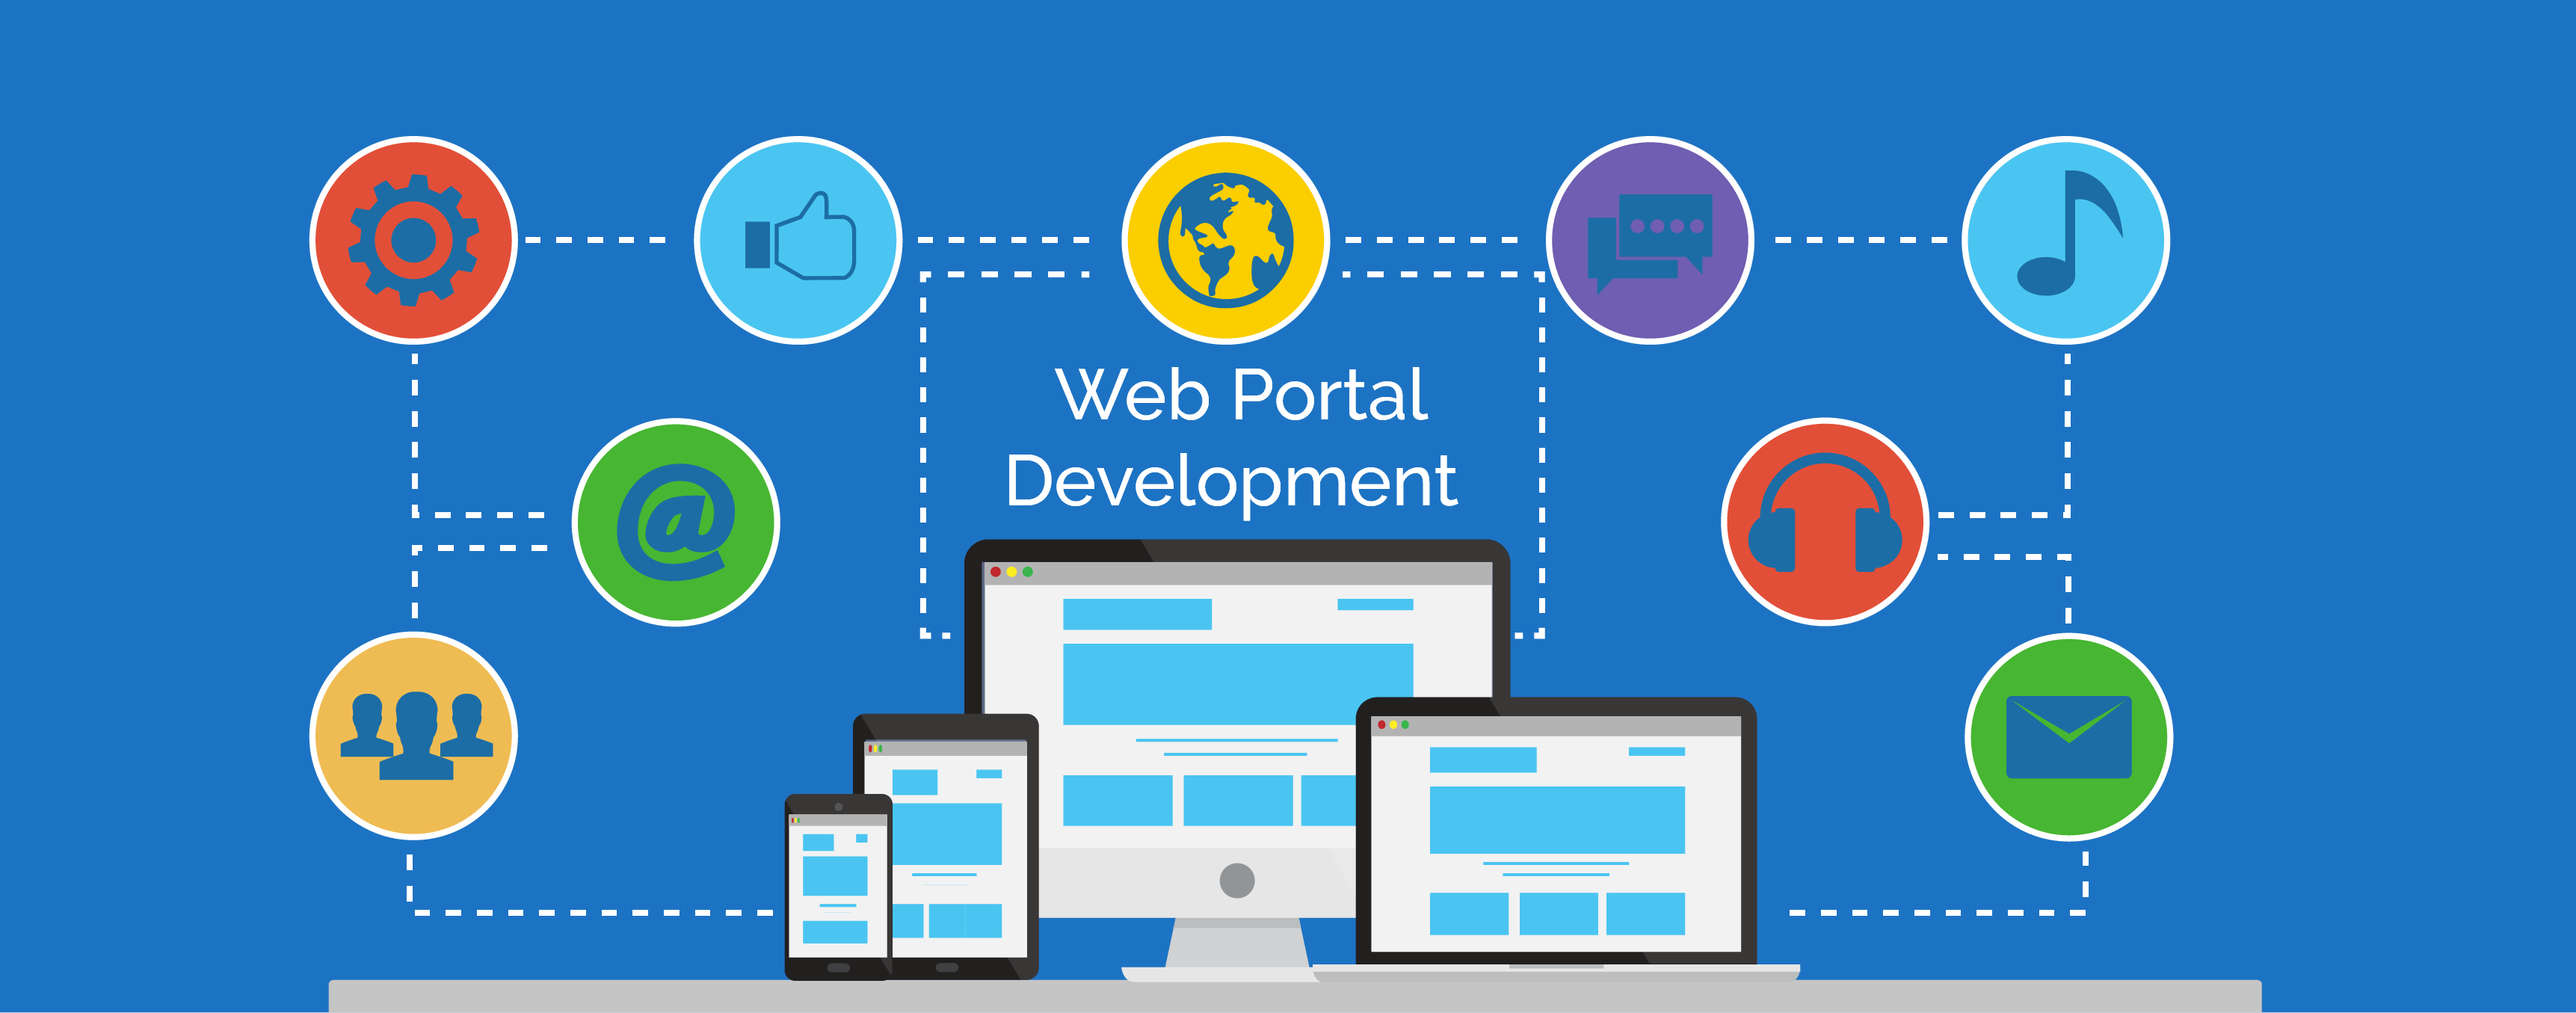 Web Portal trên nền tảng Web 3.0